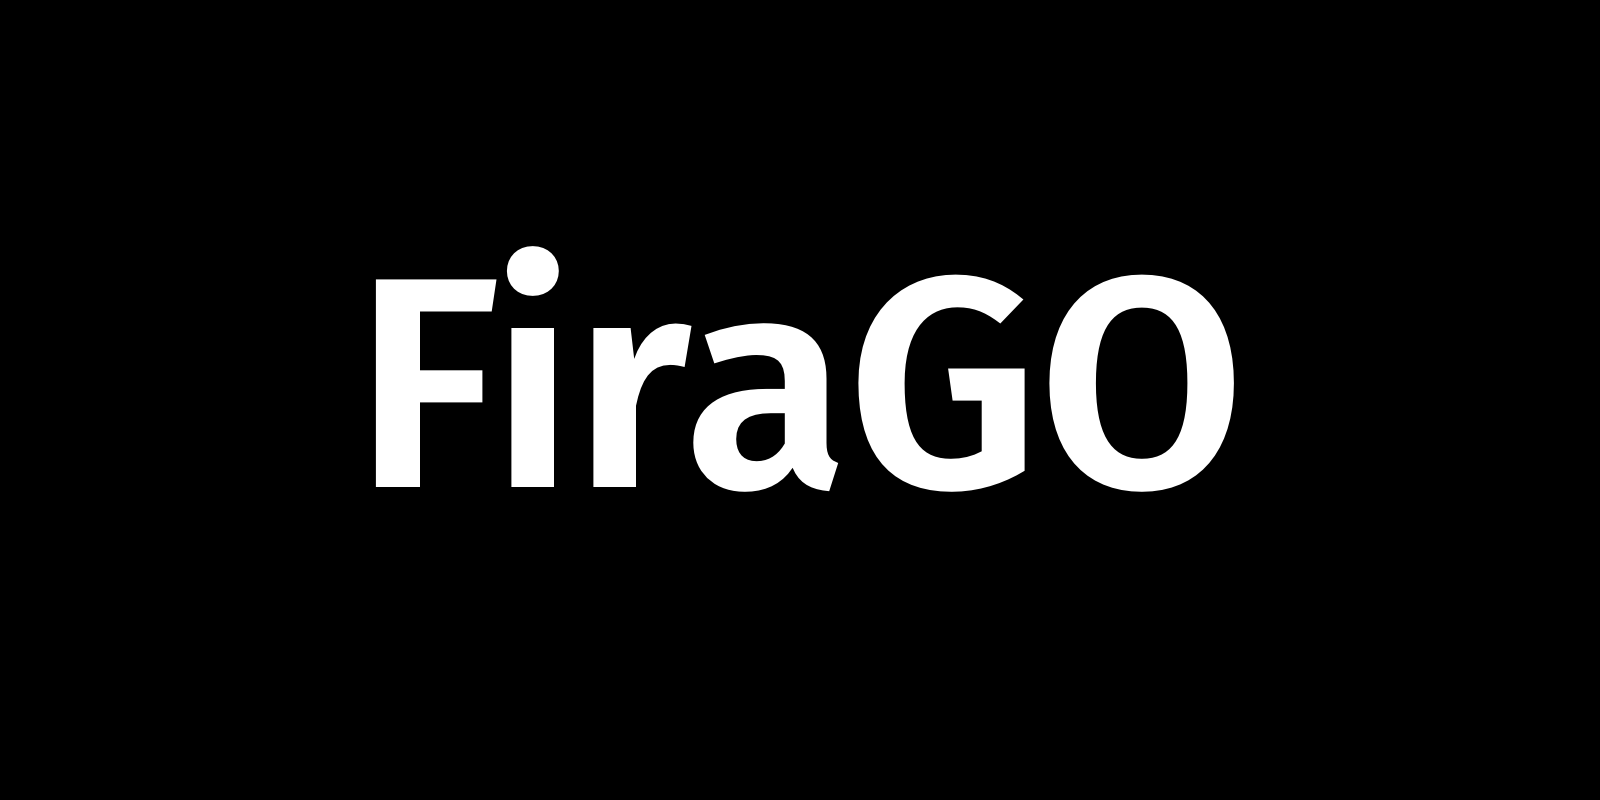 FiraGO by bBox Type